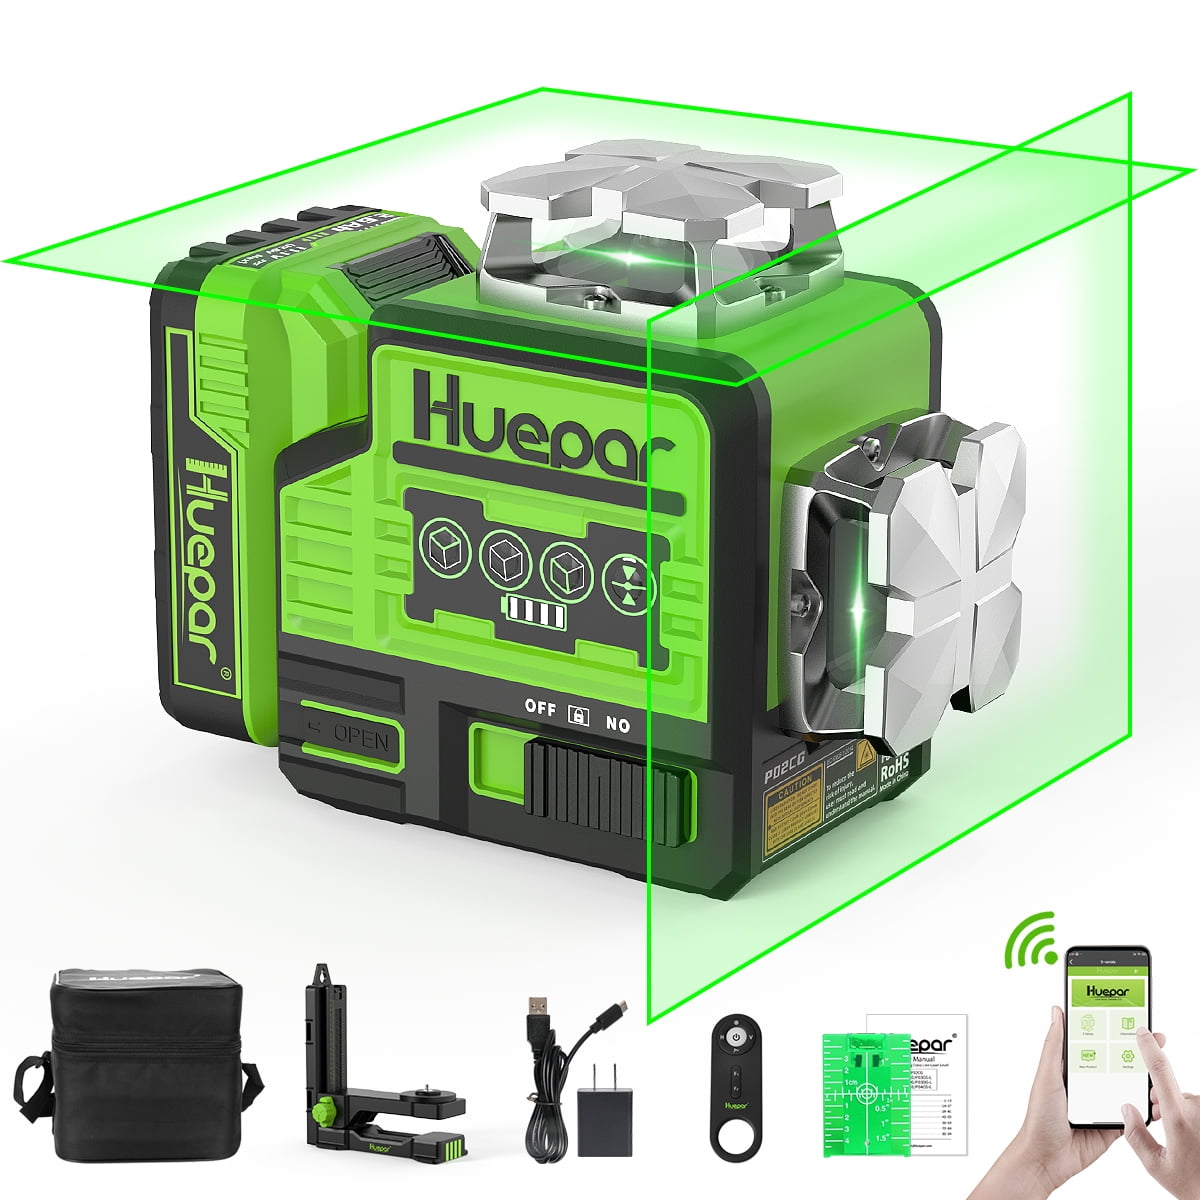 Huepar P02CG - 2 x 360° Green Bluetooth Self-Leveling 12 Lines Cross Laser Tool with Pulse Mode